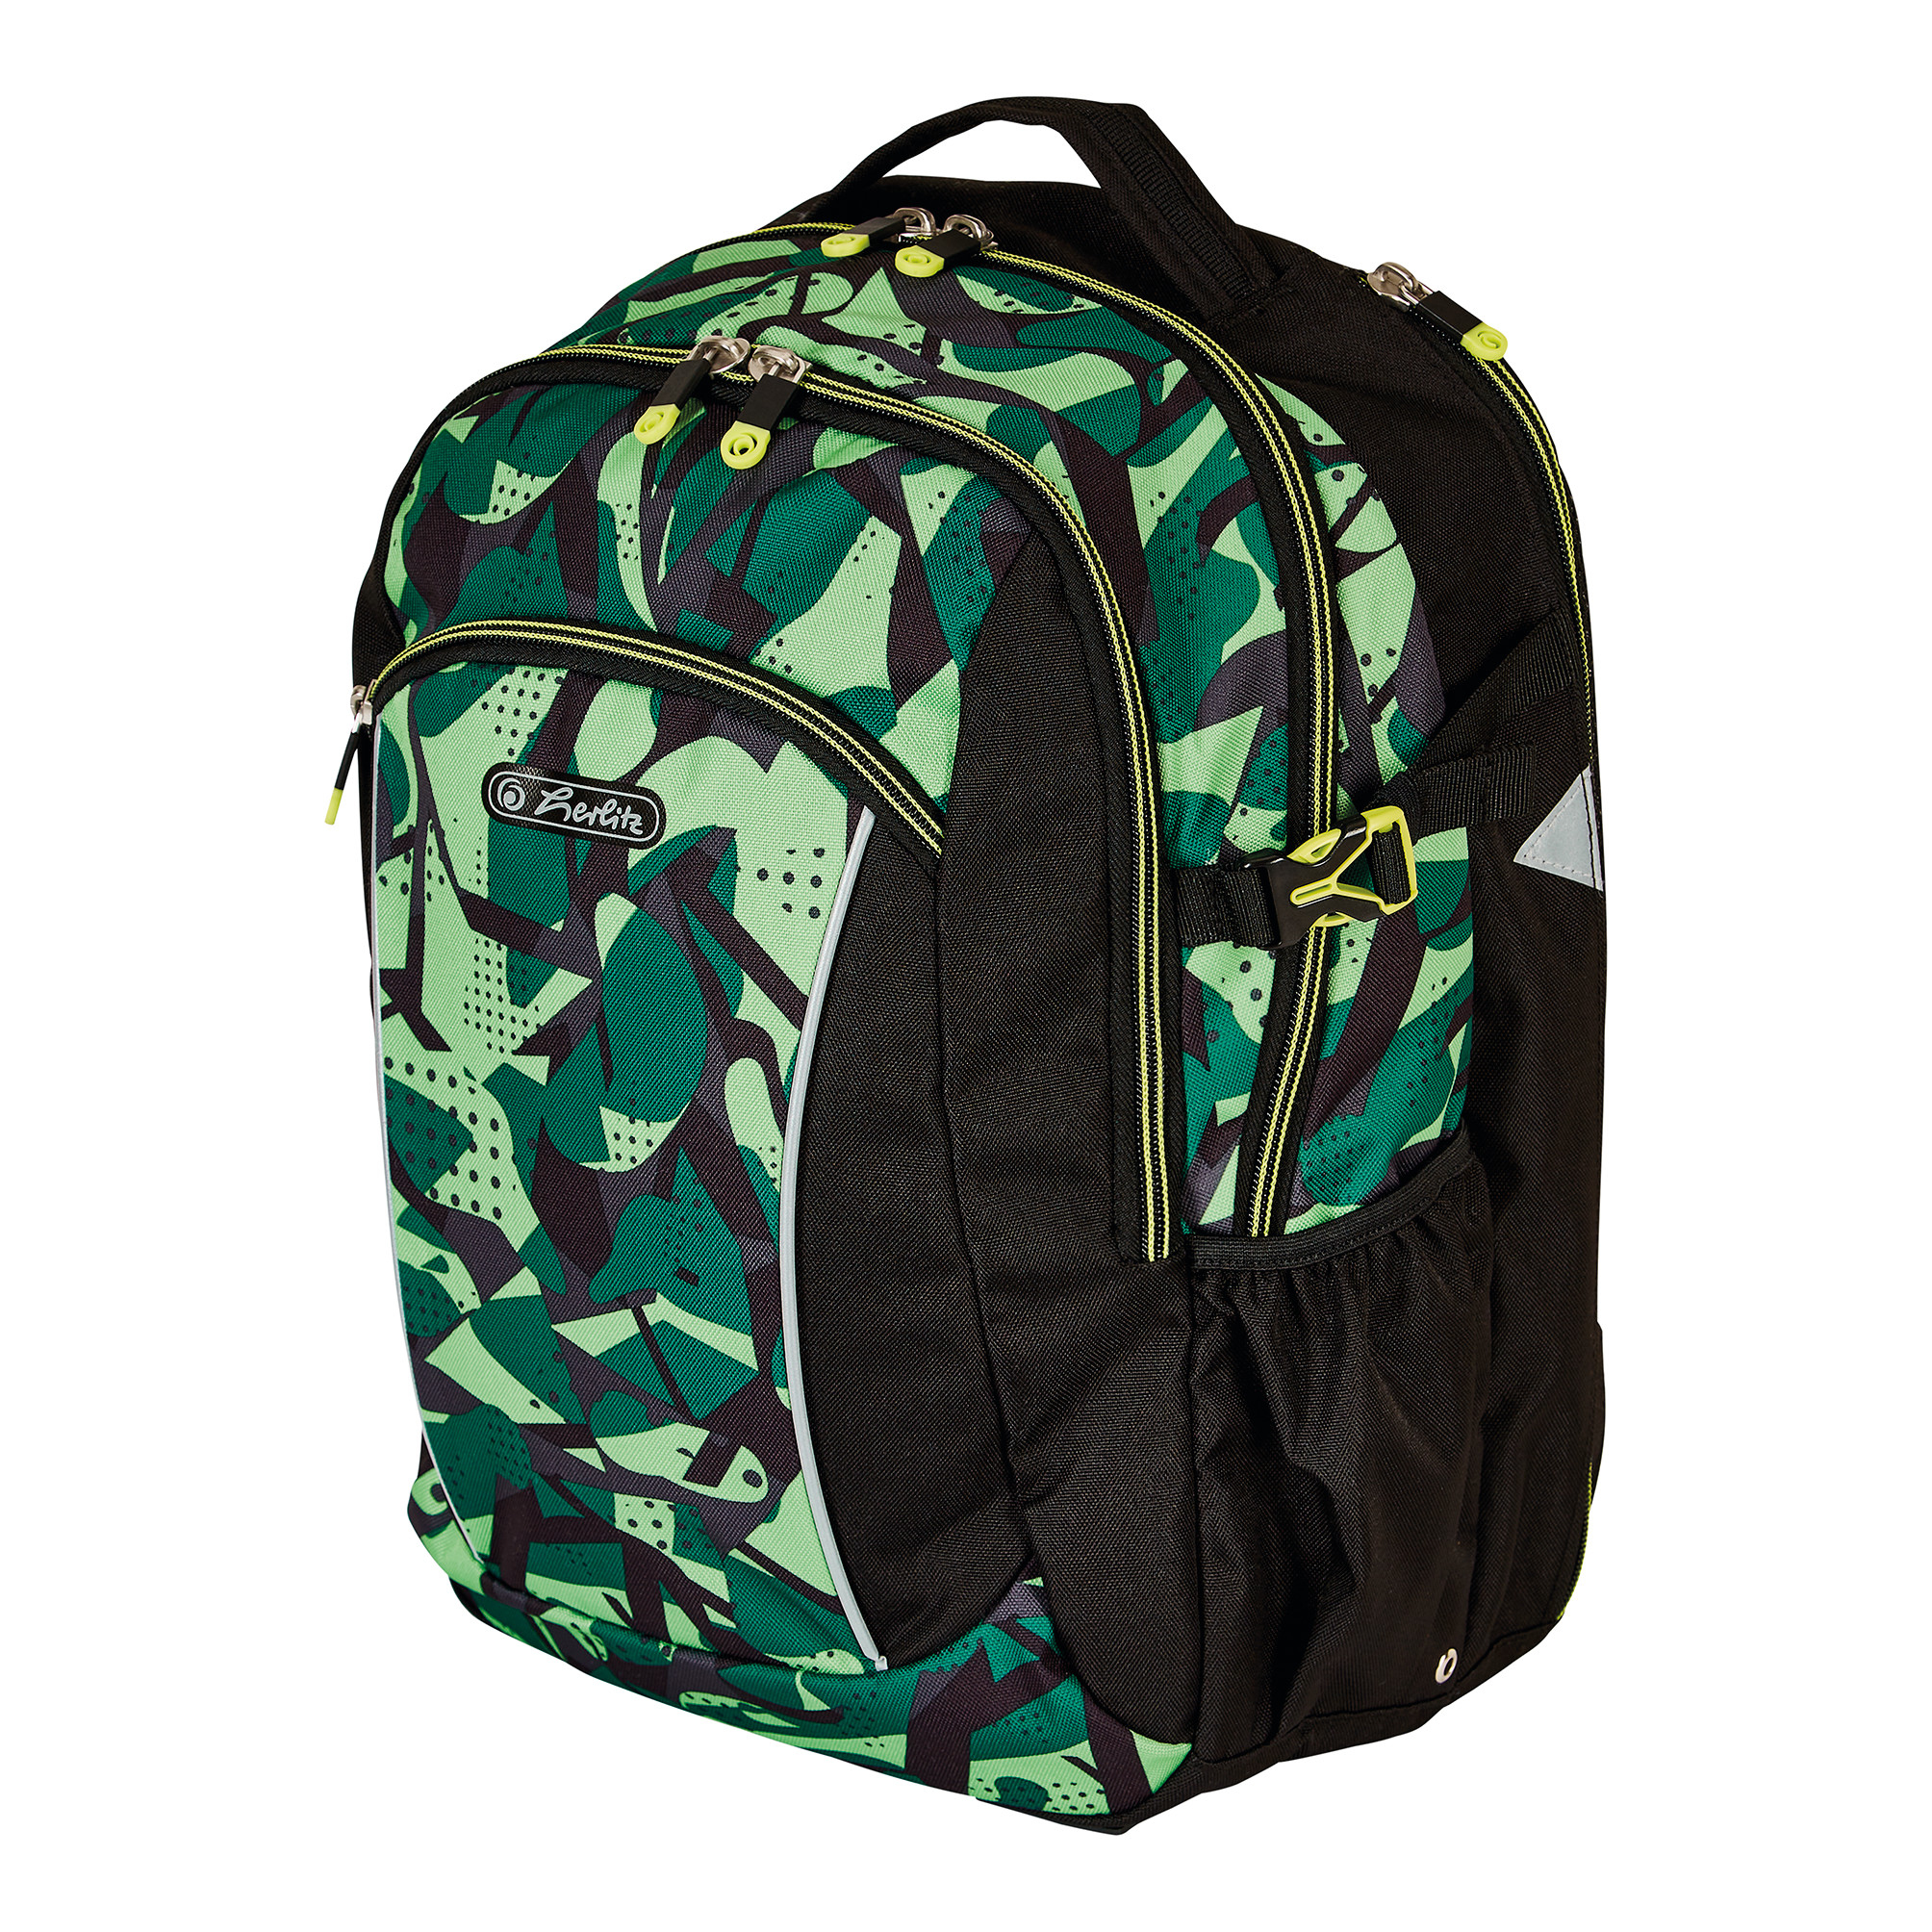 Herlitz Rookie Sweet Jungle backpack 50043897, Bags for Kids